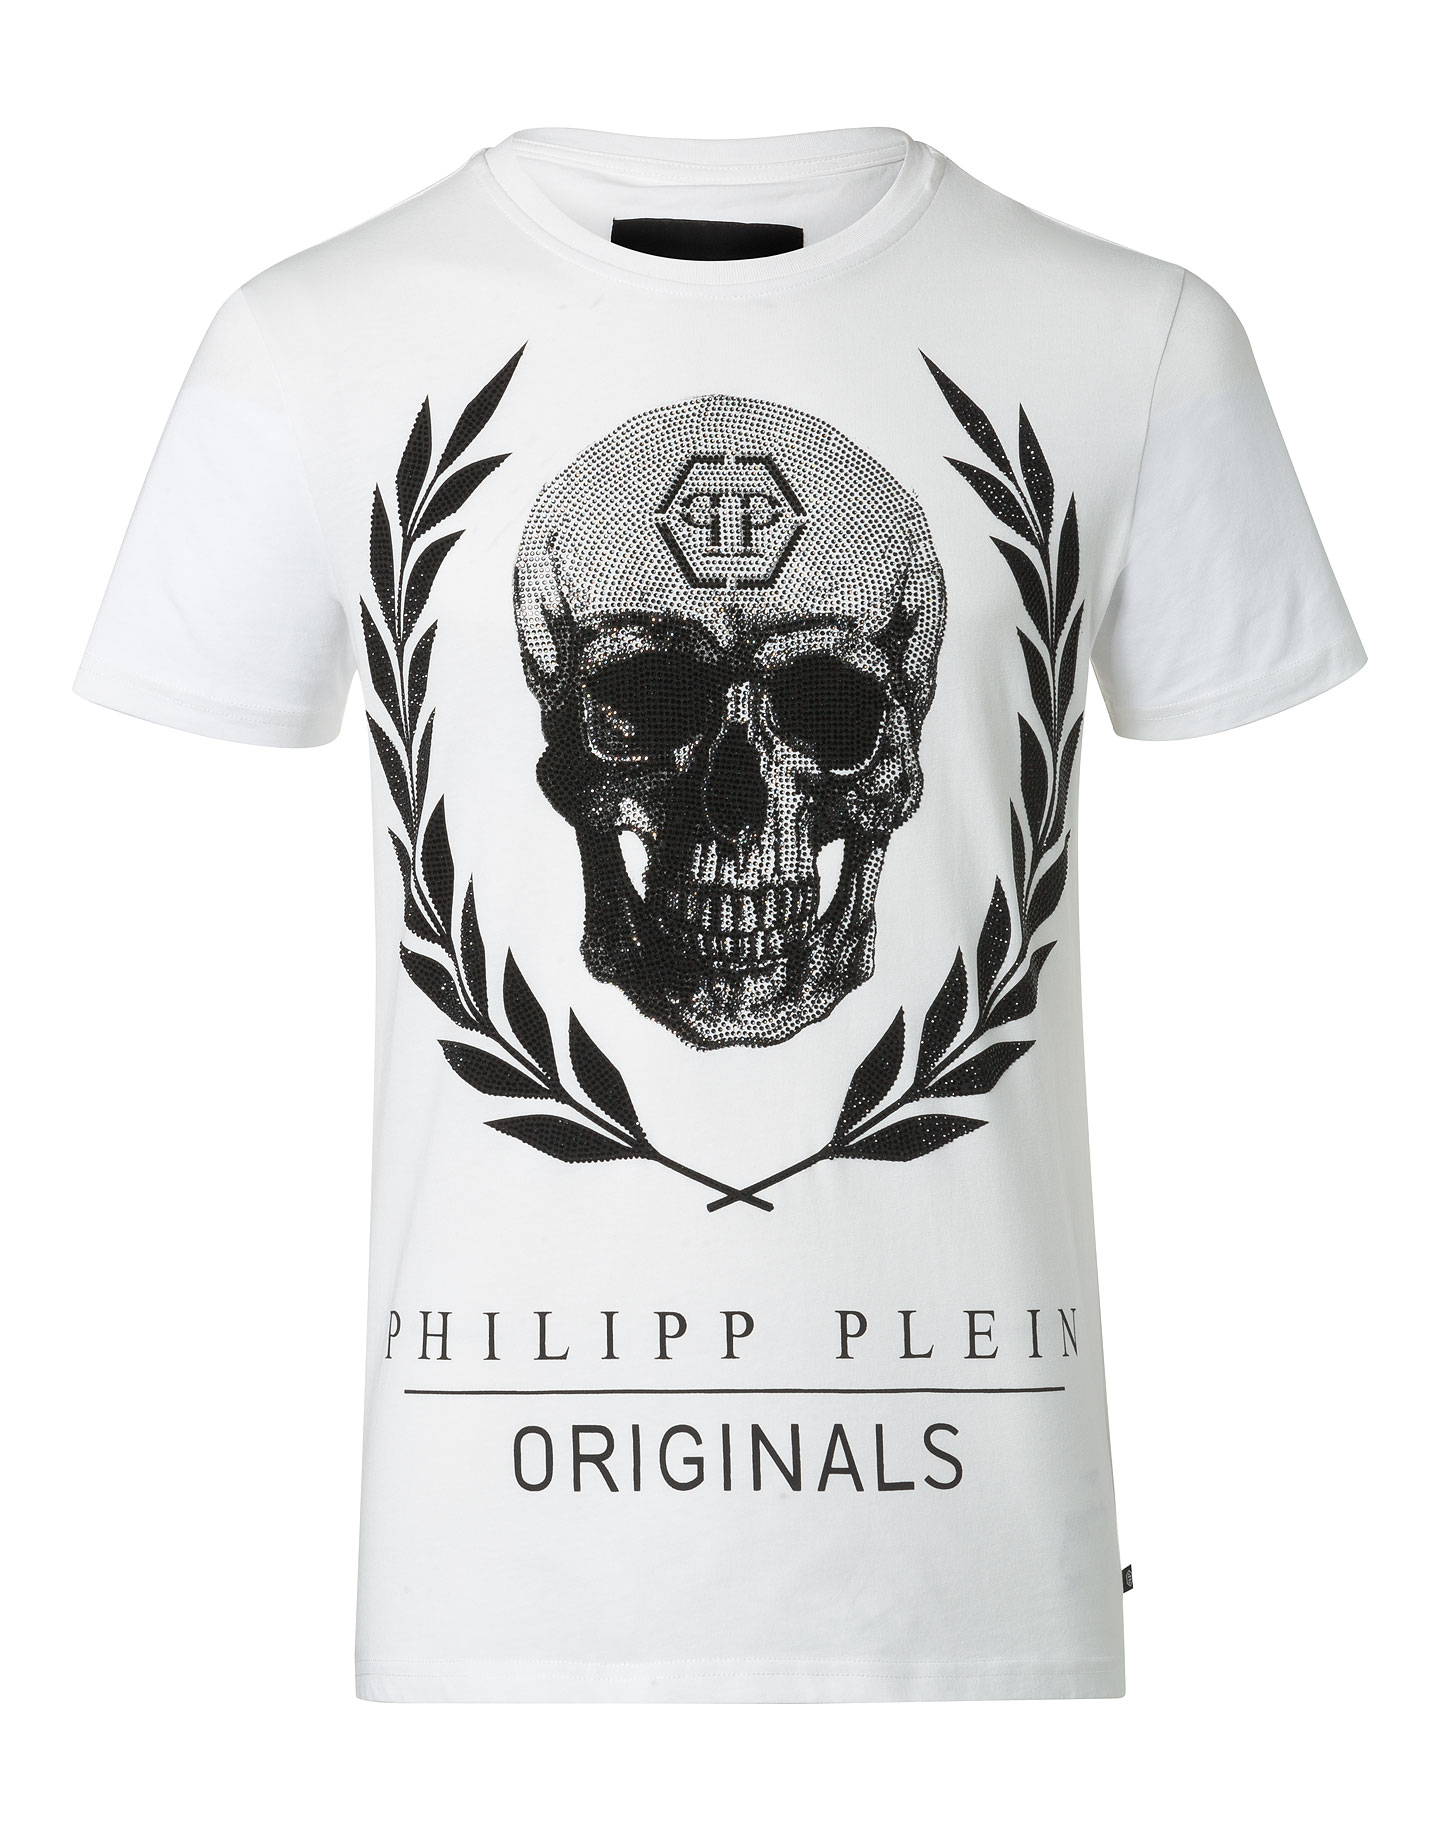 philipp plein shirts price in south africa